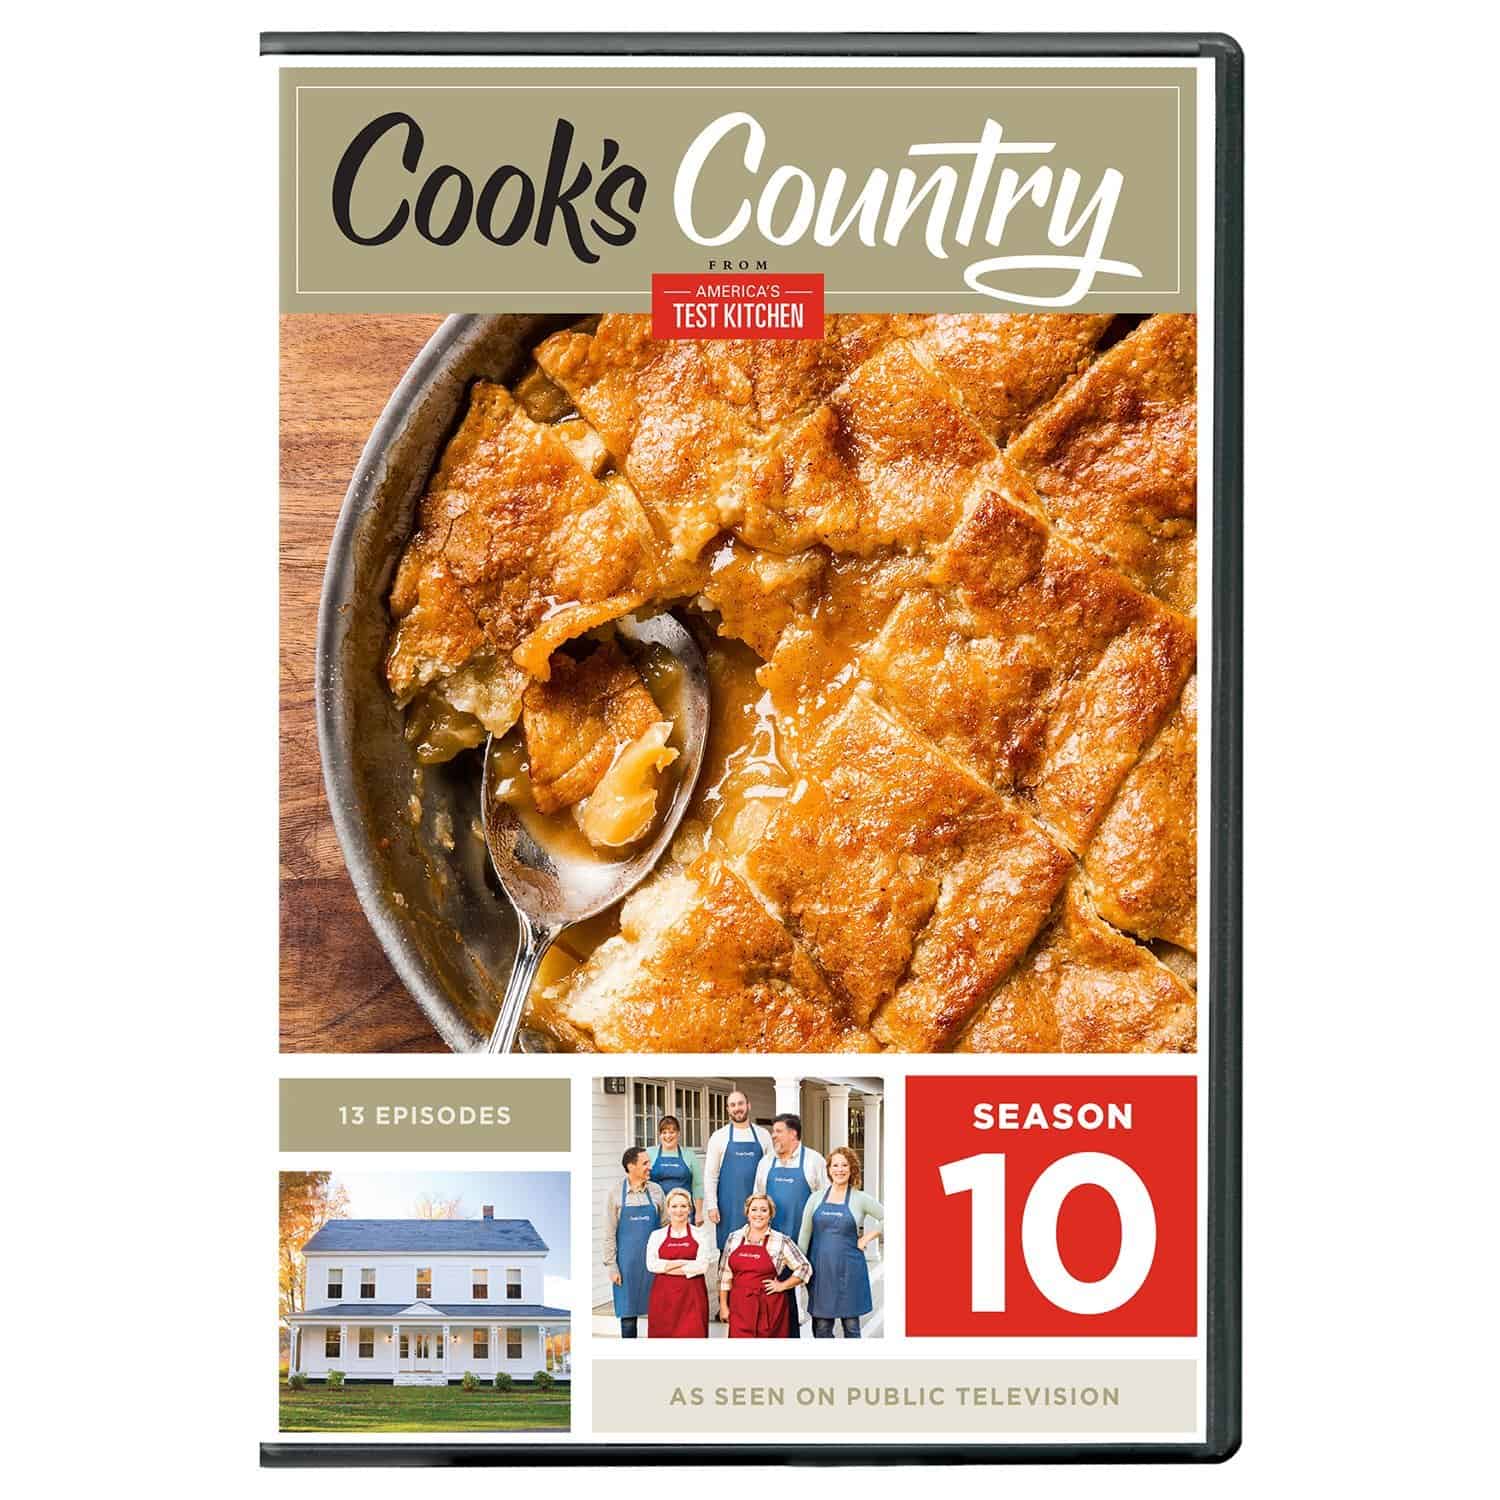 Cooks Country Season 10 on DVD